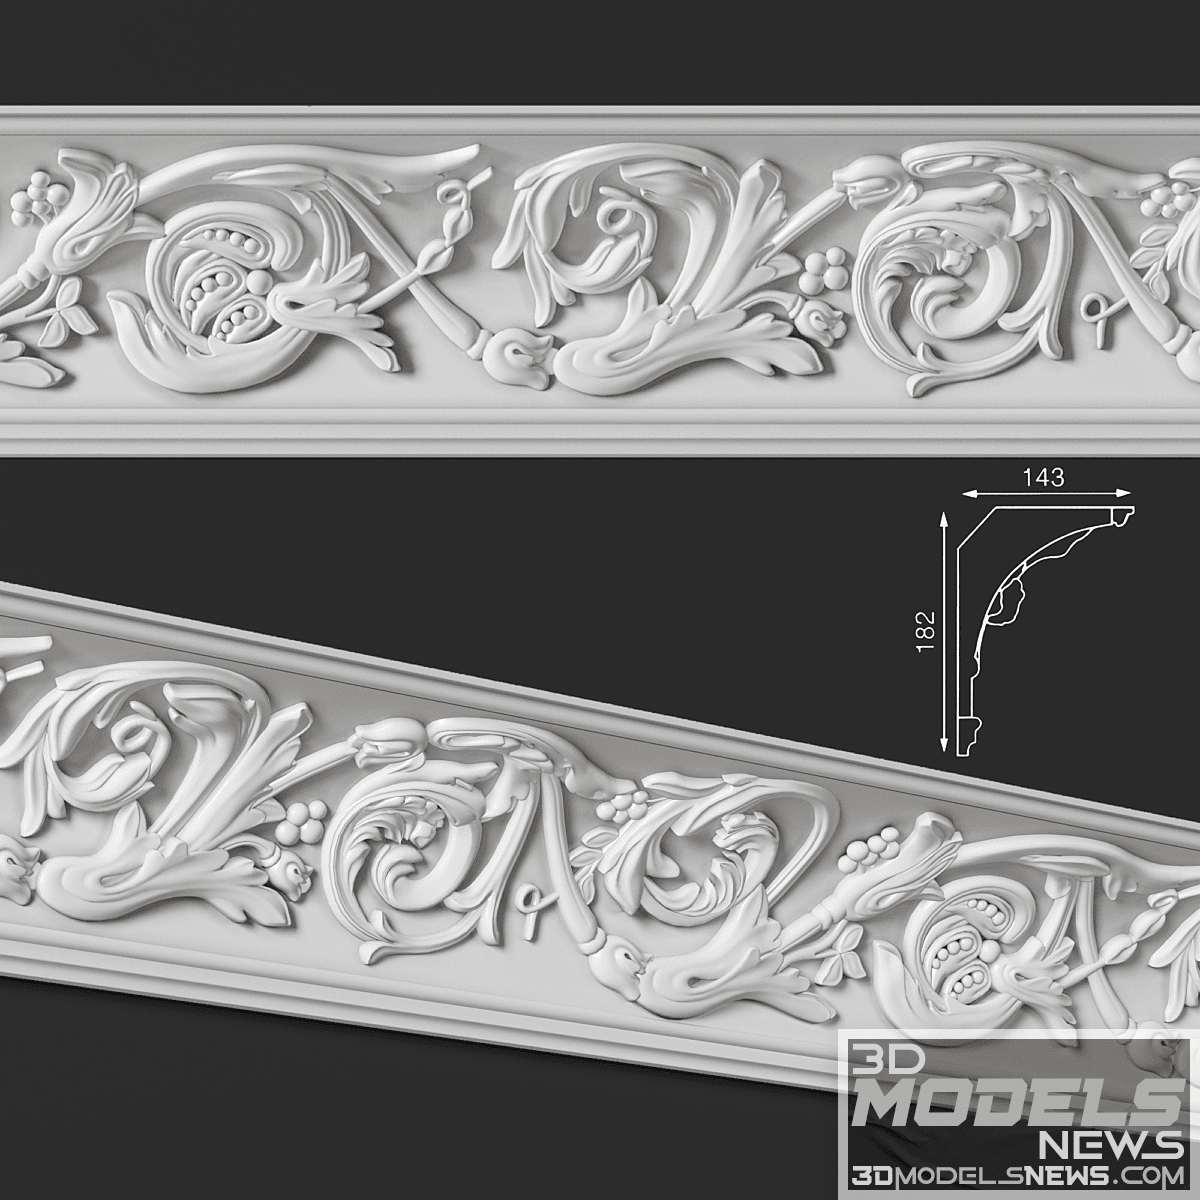 cornice - Decorative plaster - 3D model